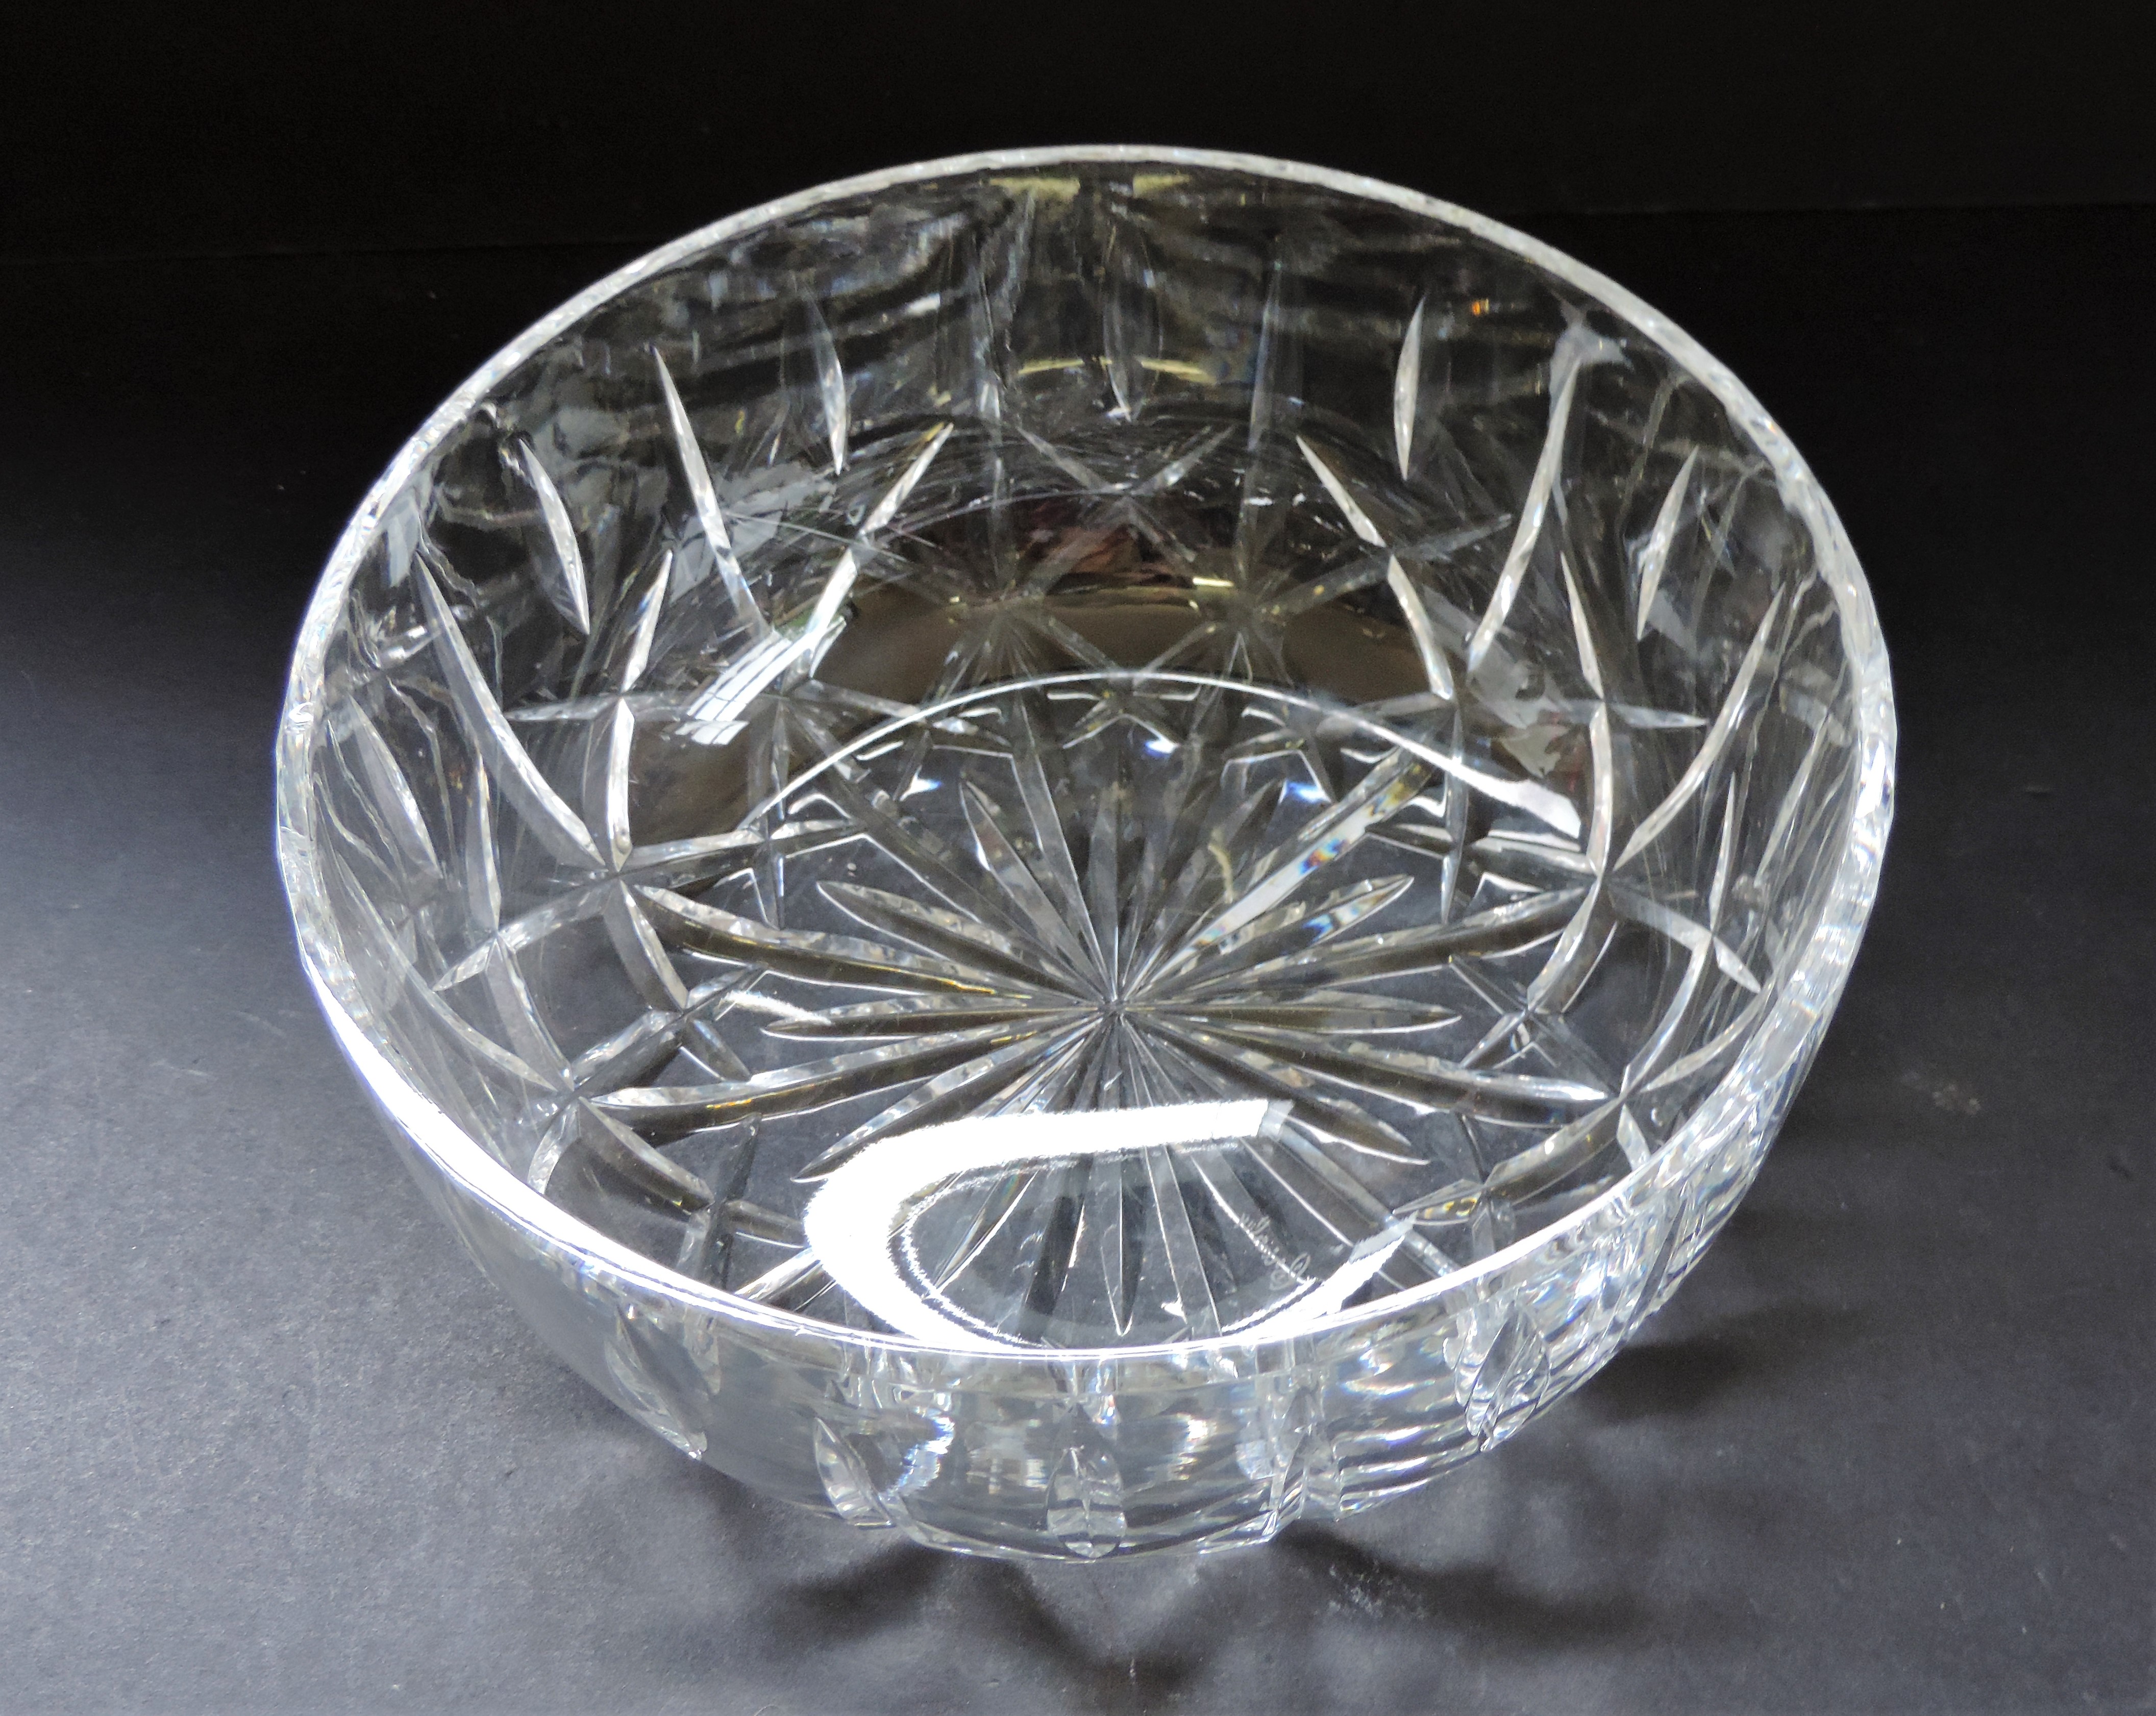 Large Royal Brierley Crystal Fruit Bowl 20cm wide - Image 3 of 5